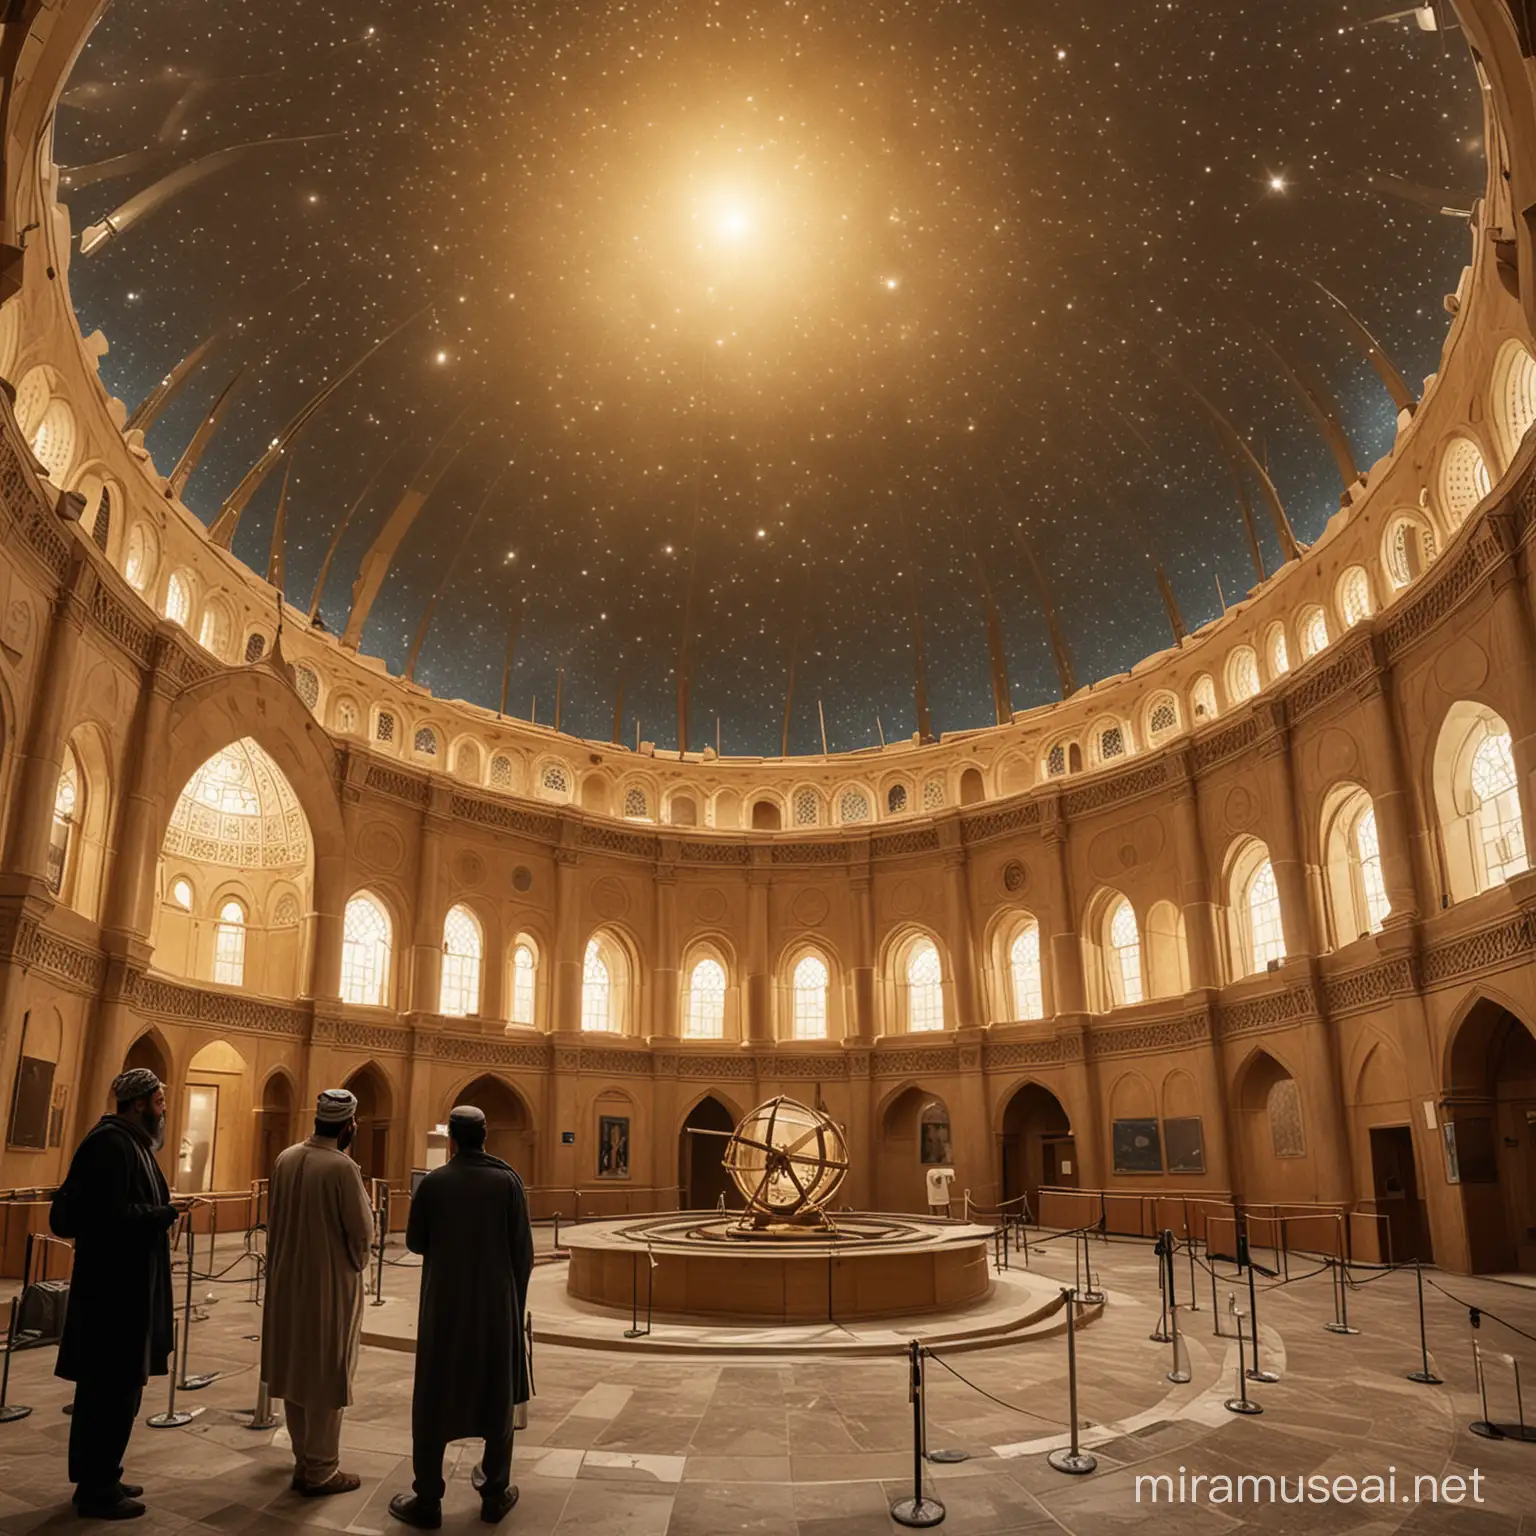 Abbasid Era Celestial Observatory Exhibition Islamic Astronomy and Navigation Advancements